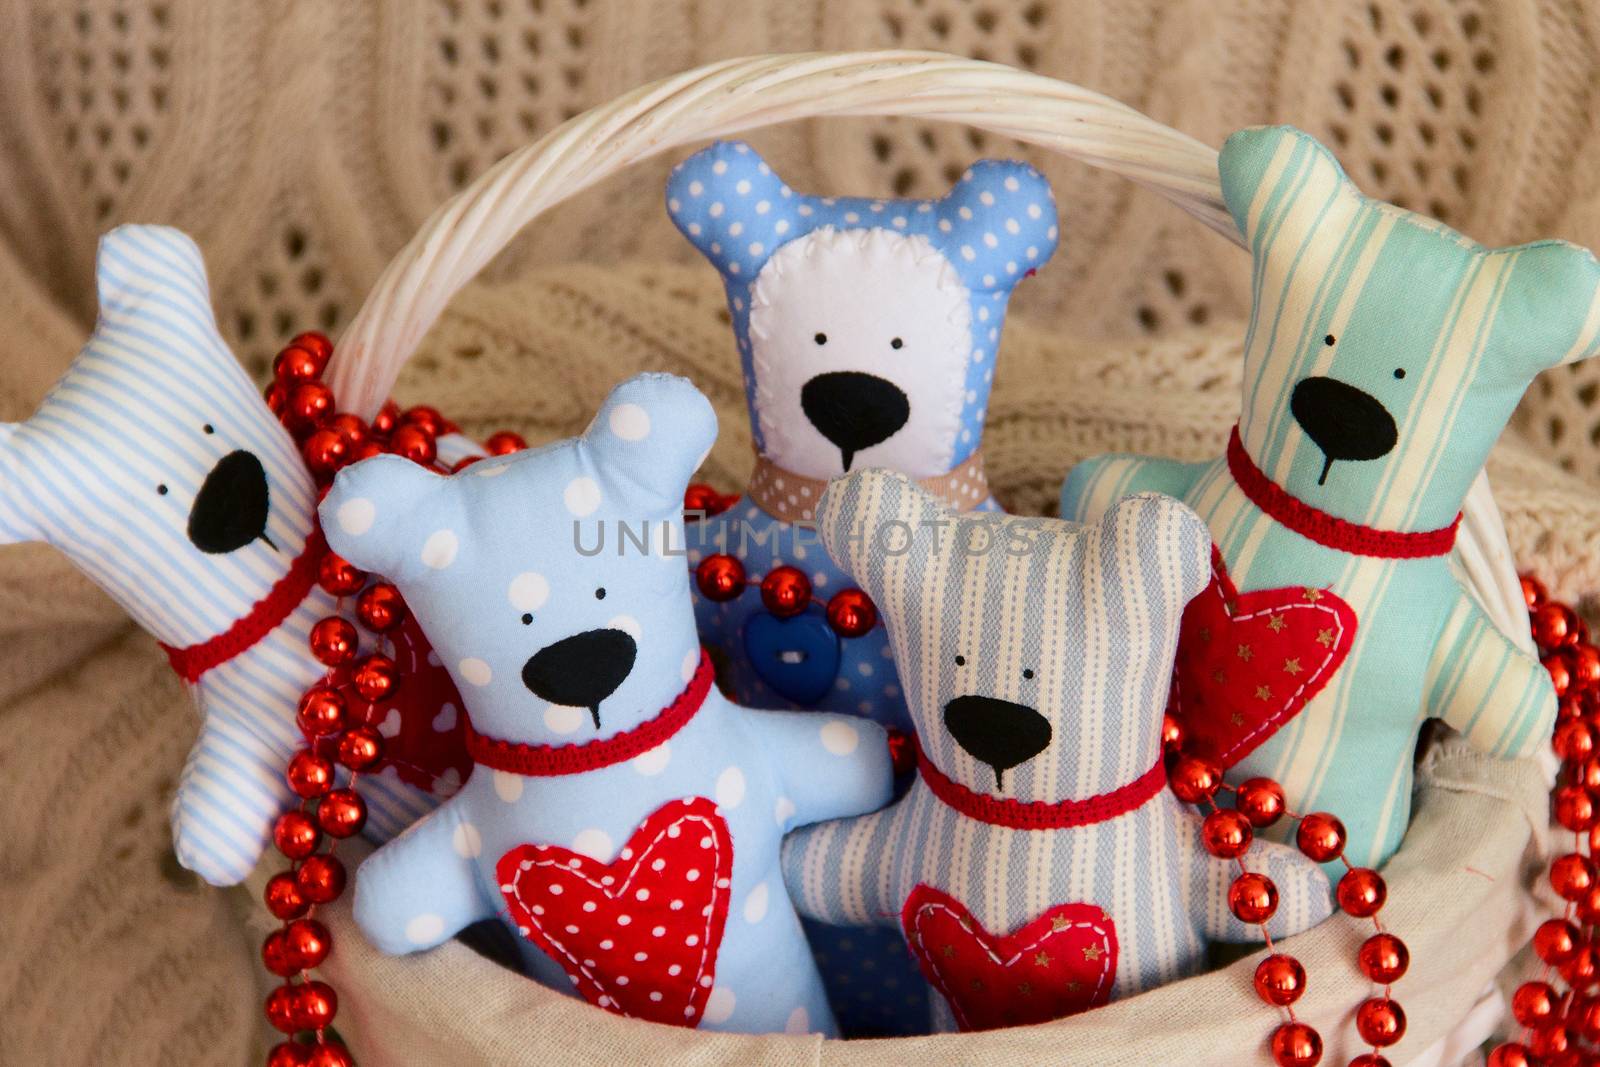 Handmade five Teddy bear for Valentine day. photo by Irinavk